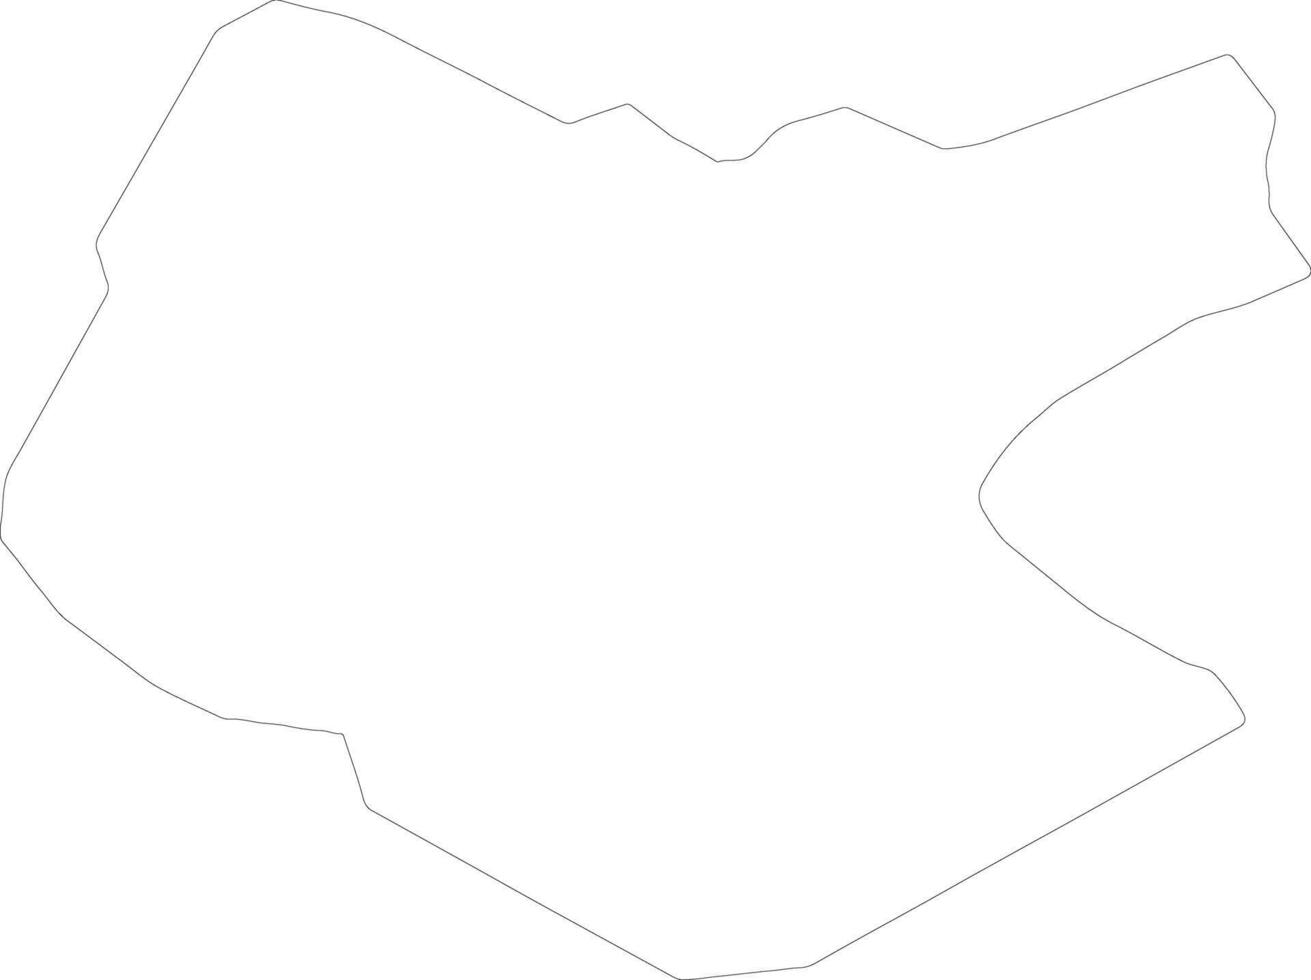 cerknica Slowenien Gliederung Karte vektor